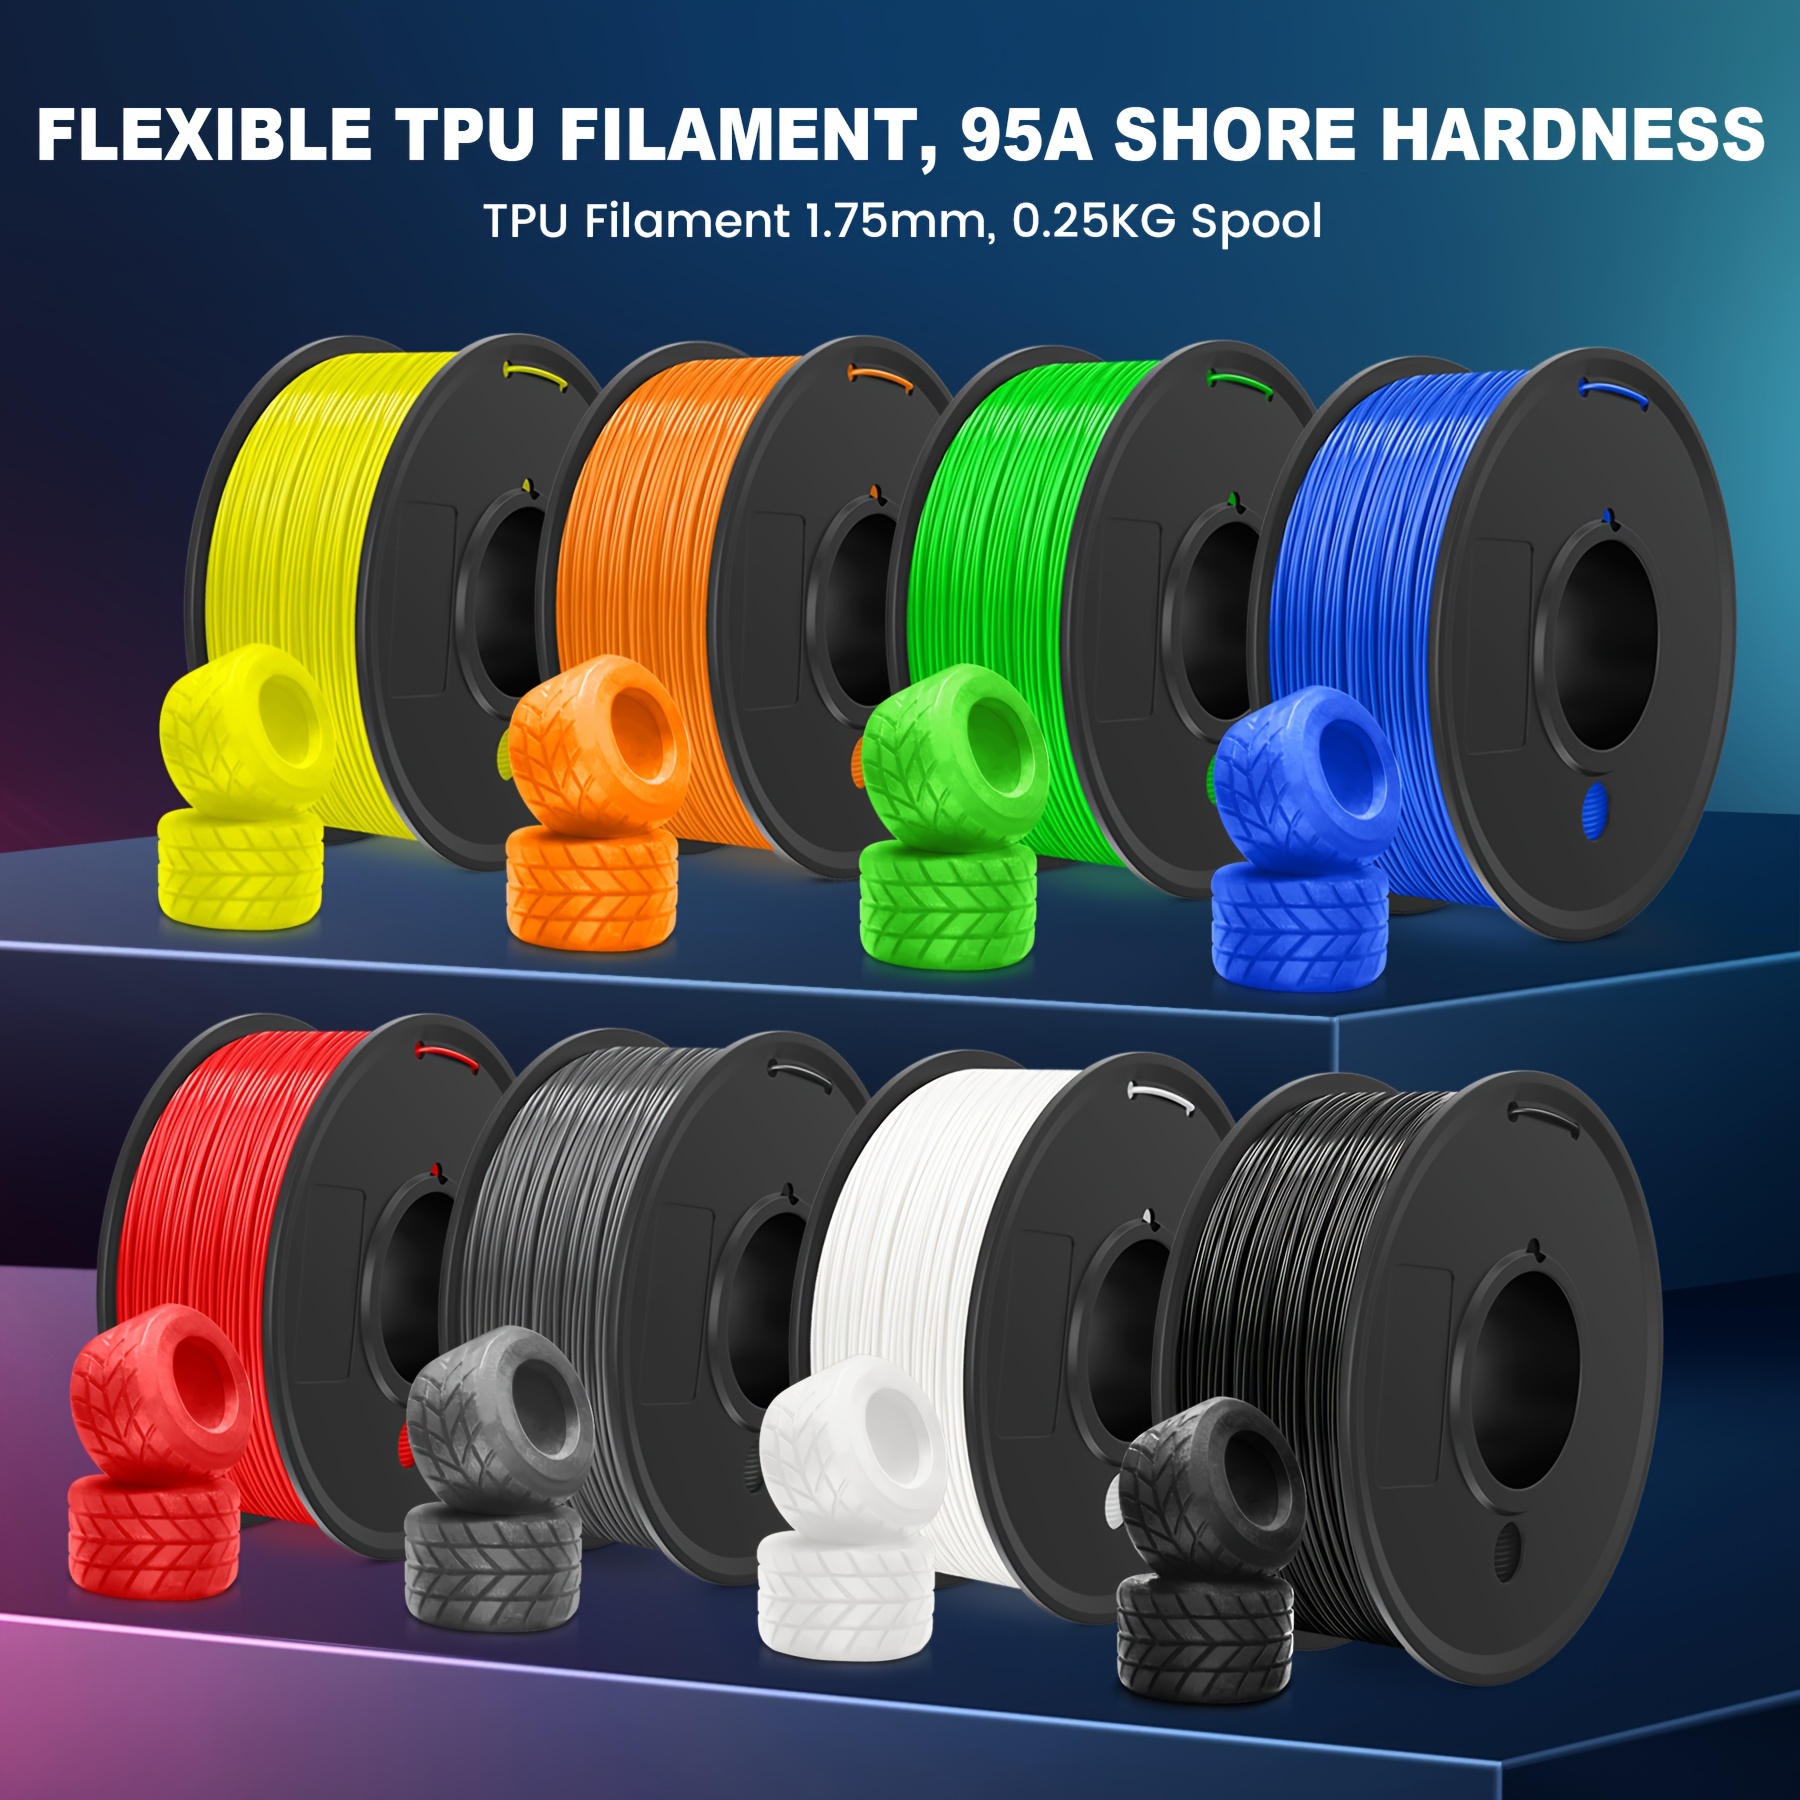 SUNLU 3D Printer Filament, Toughness PETG Filaments for 3D Printing, Neatly  Wound Filament, High Strength, Better Flow of SUNLU No Clogging Premium PETG  Filament 1.75 +/- 0.02 mm, 1KG Spool, Black 